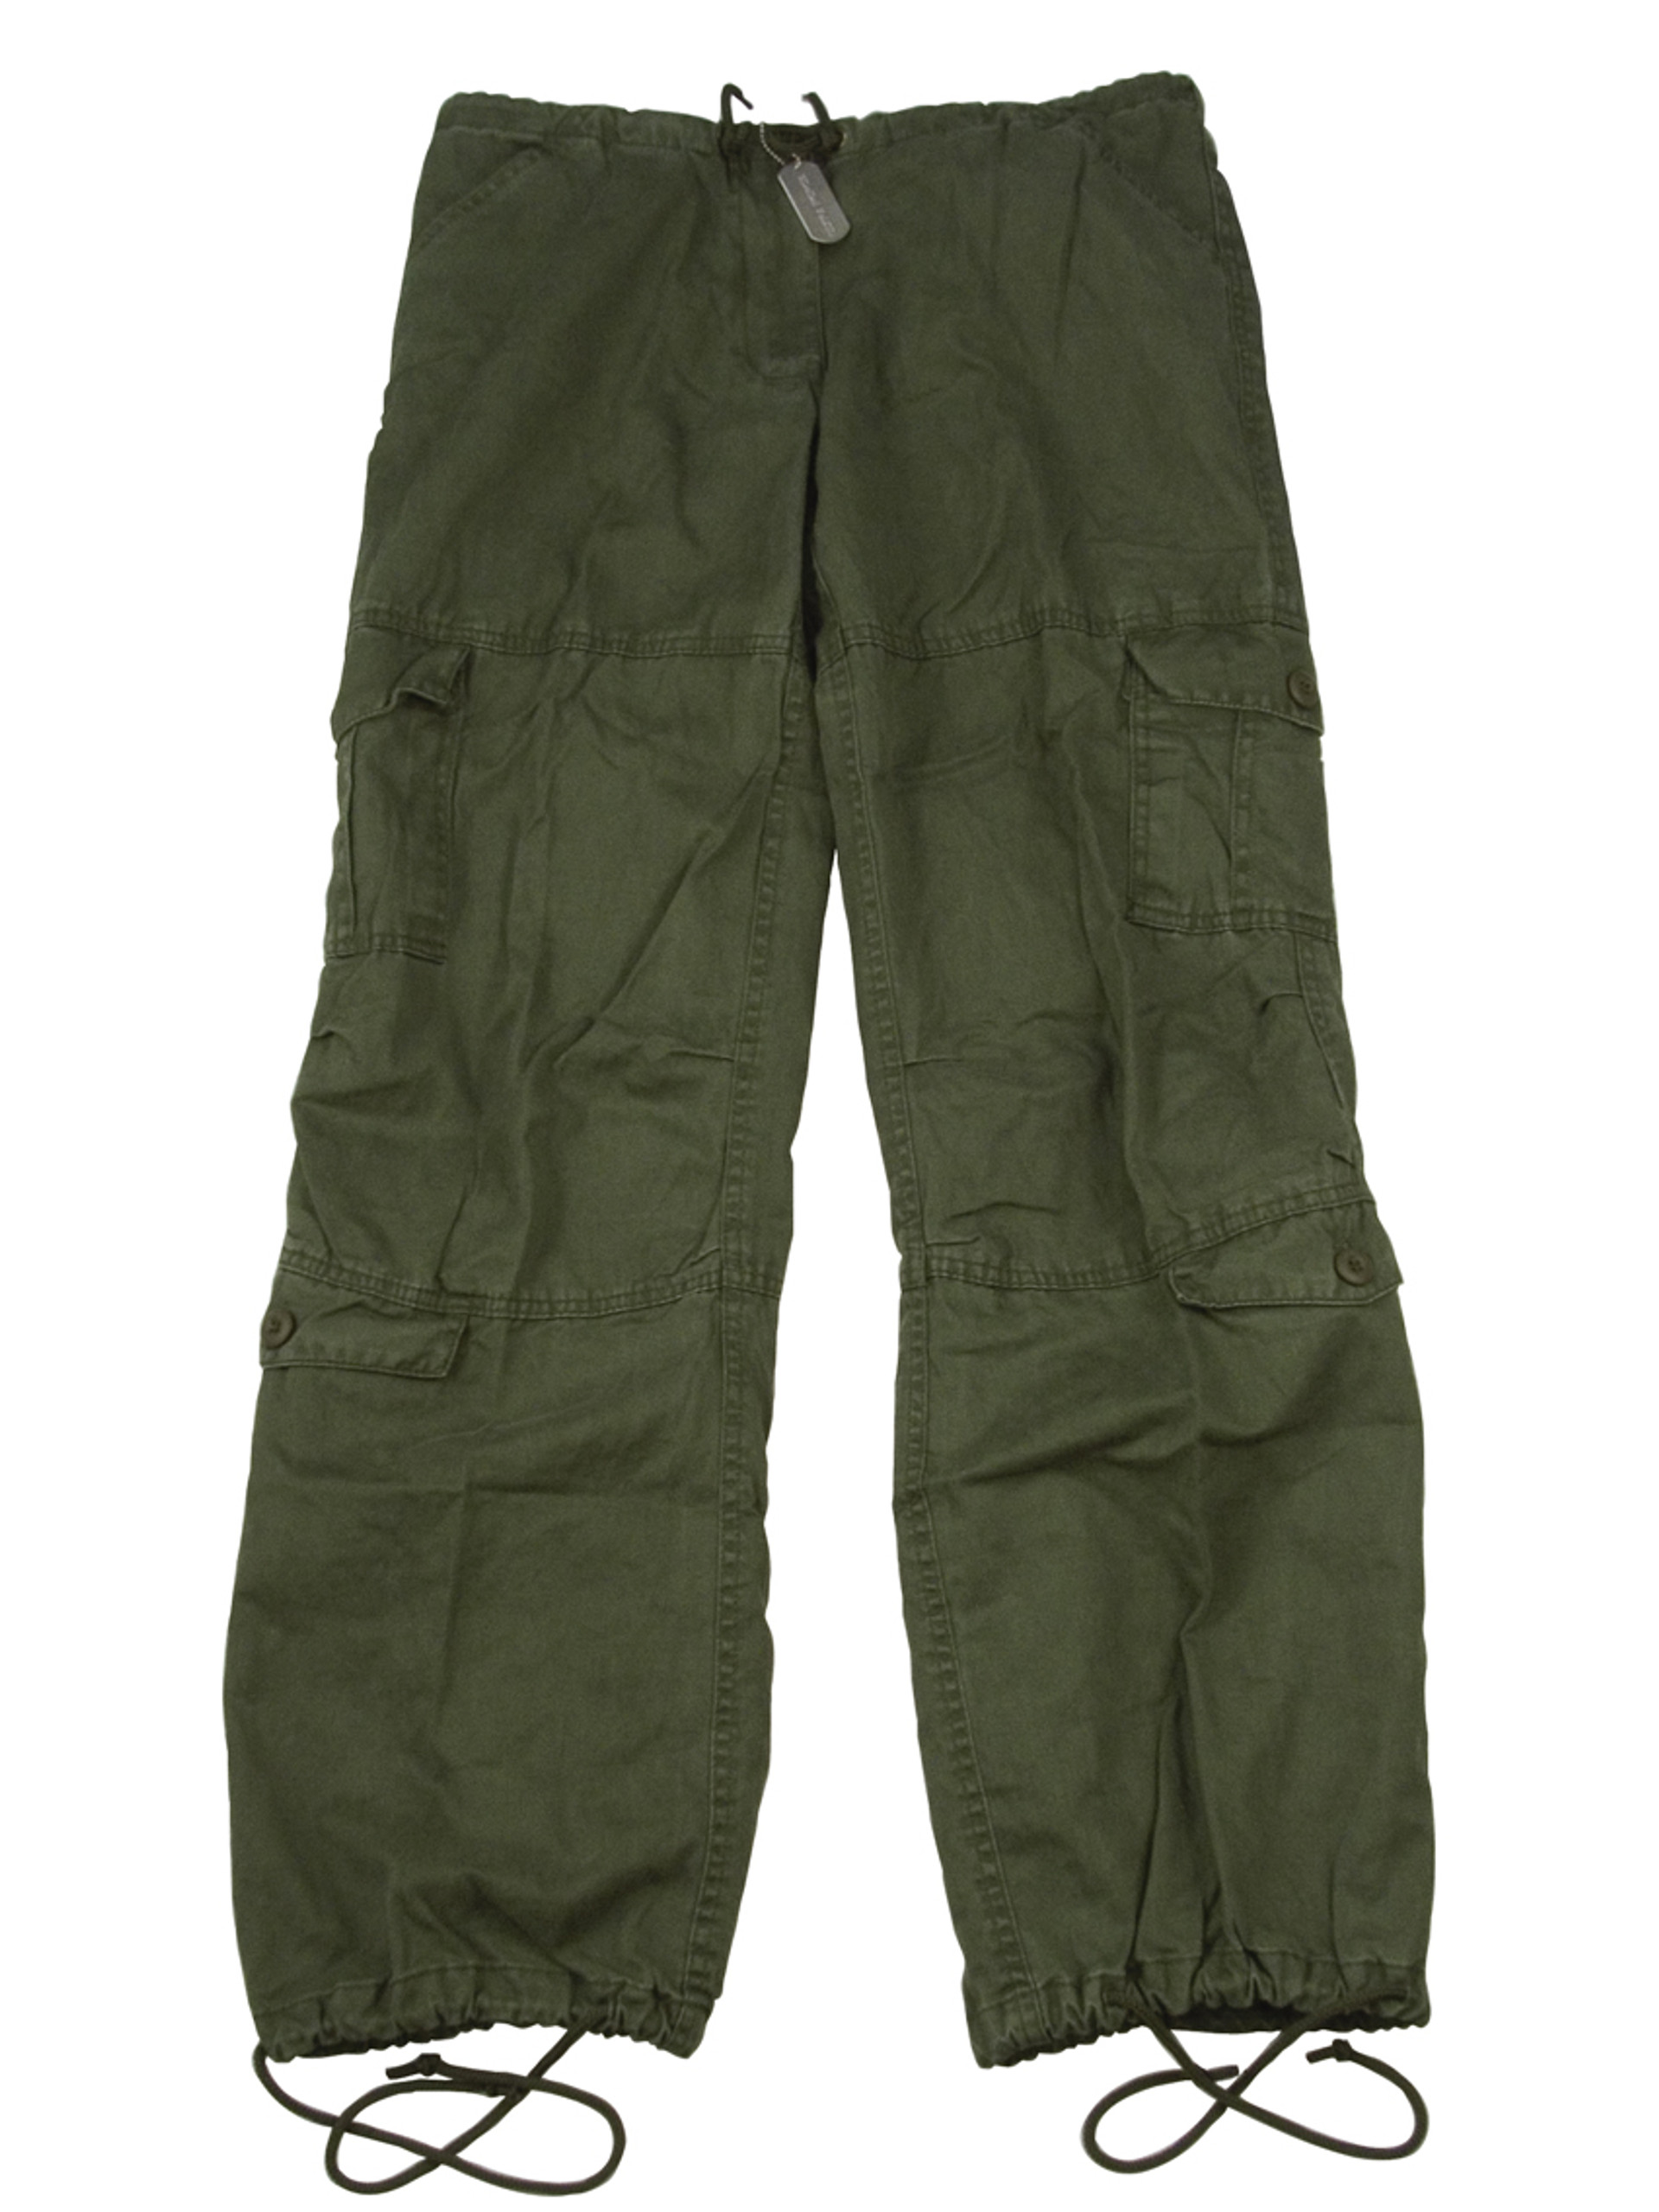 Shop Women's Olive Vintage Paratrooper Pants - Fatigues Army Navy Gear